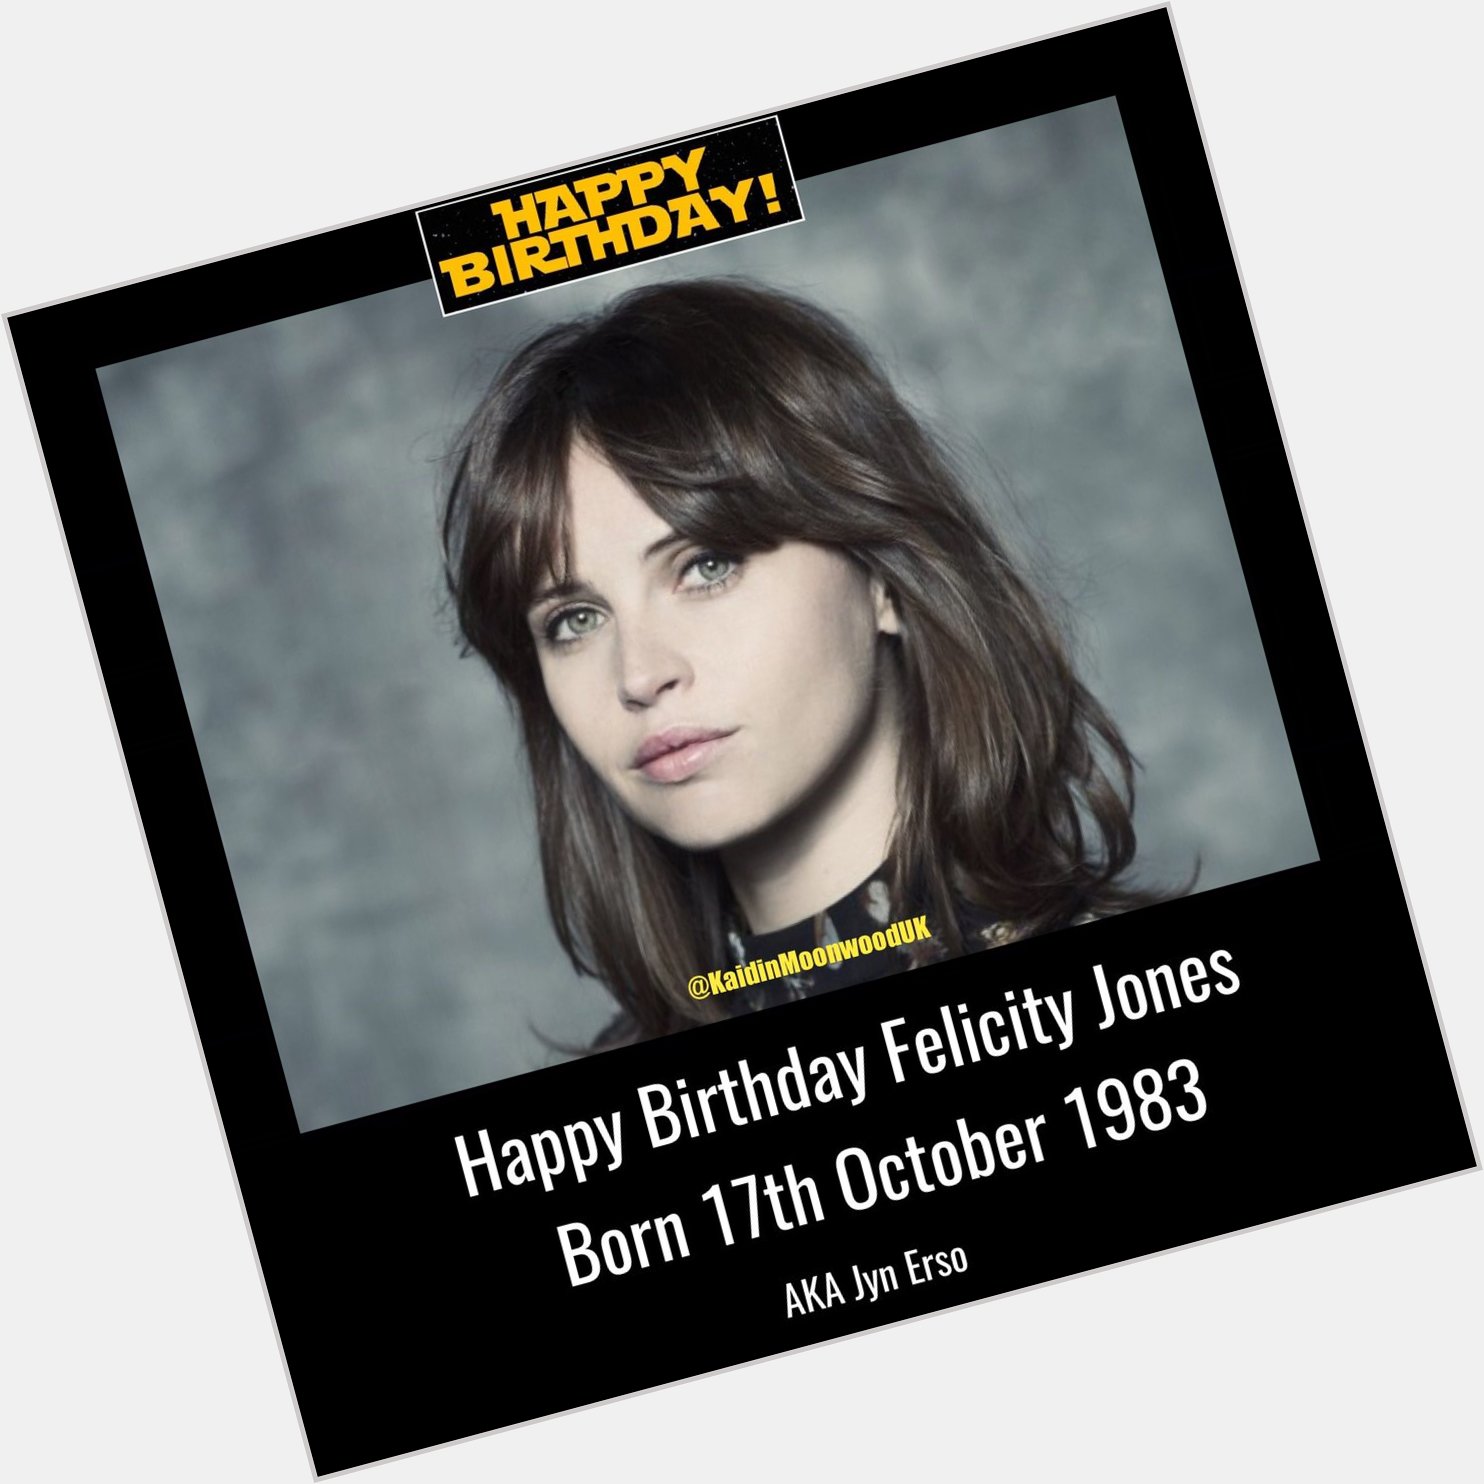 Happy Birthday Felicity Jones aka Jyn Erso. Born 17th October 1983.   